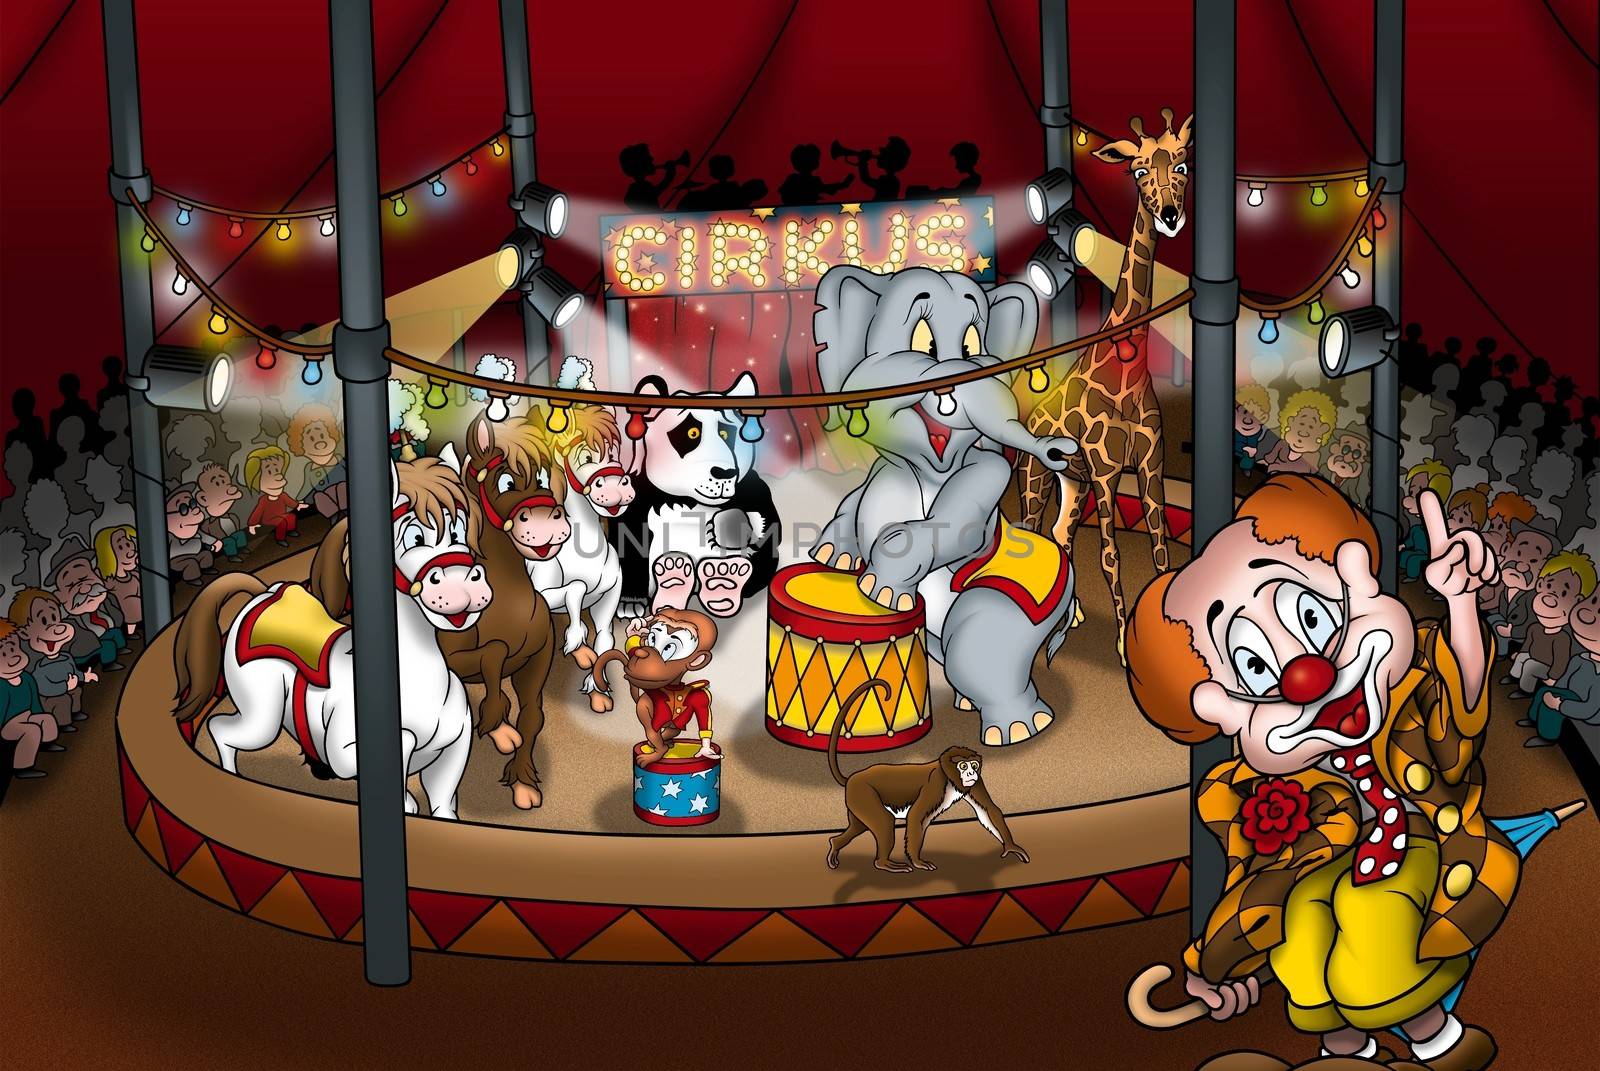 Circus Show by illustratorCZ